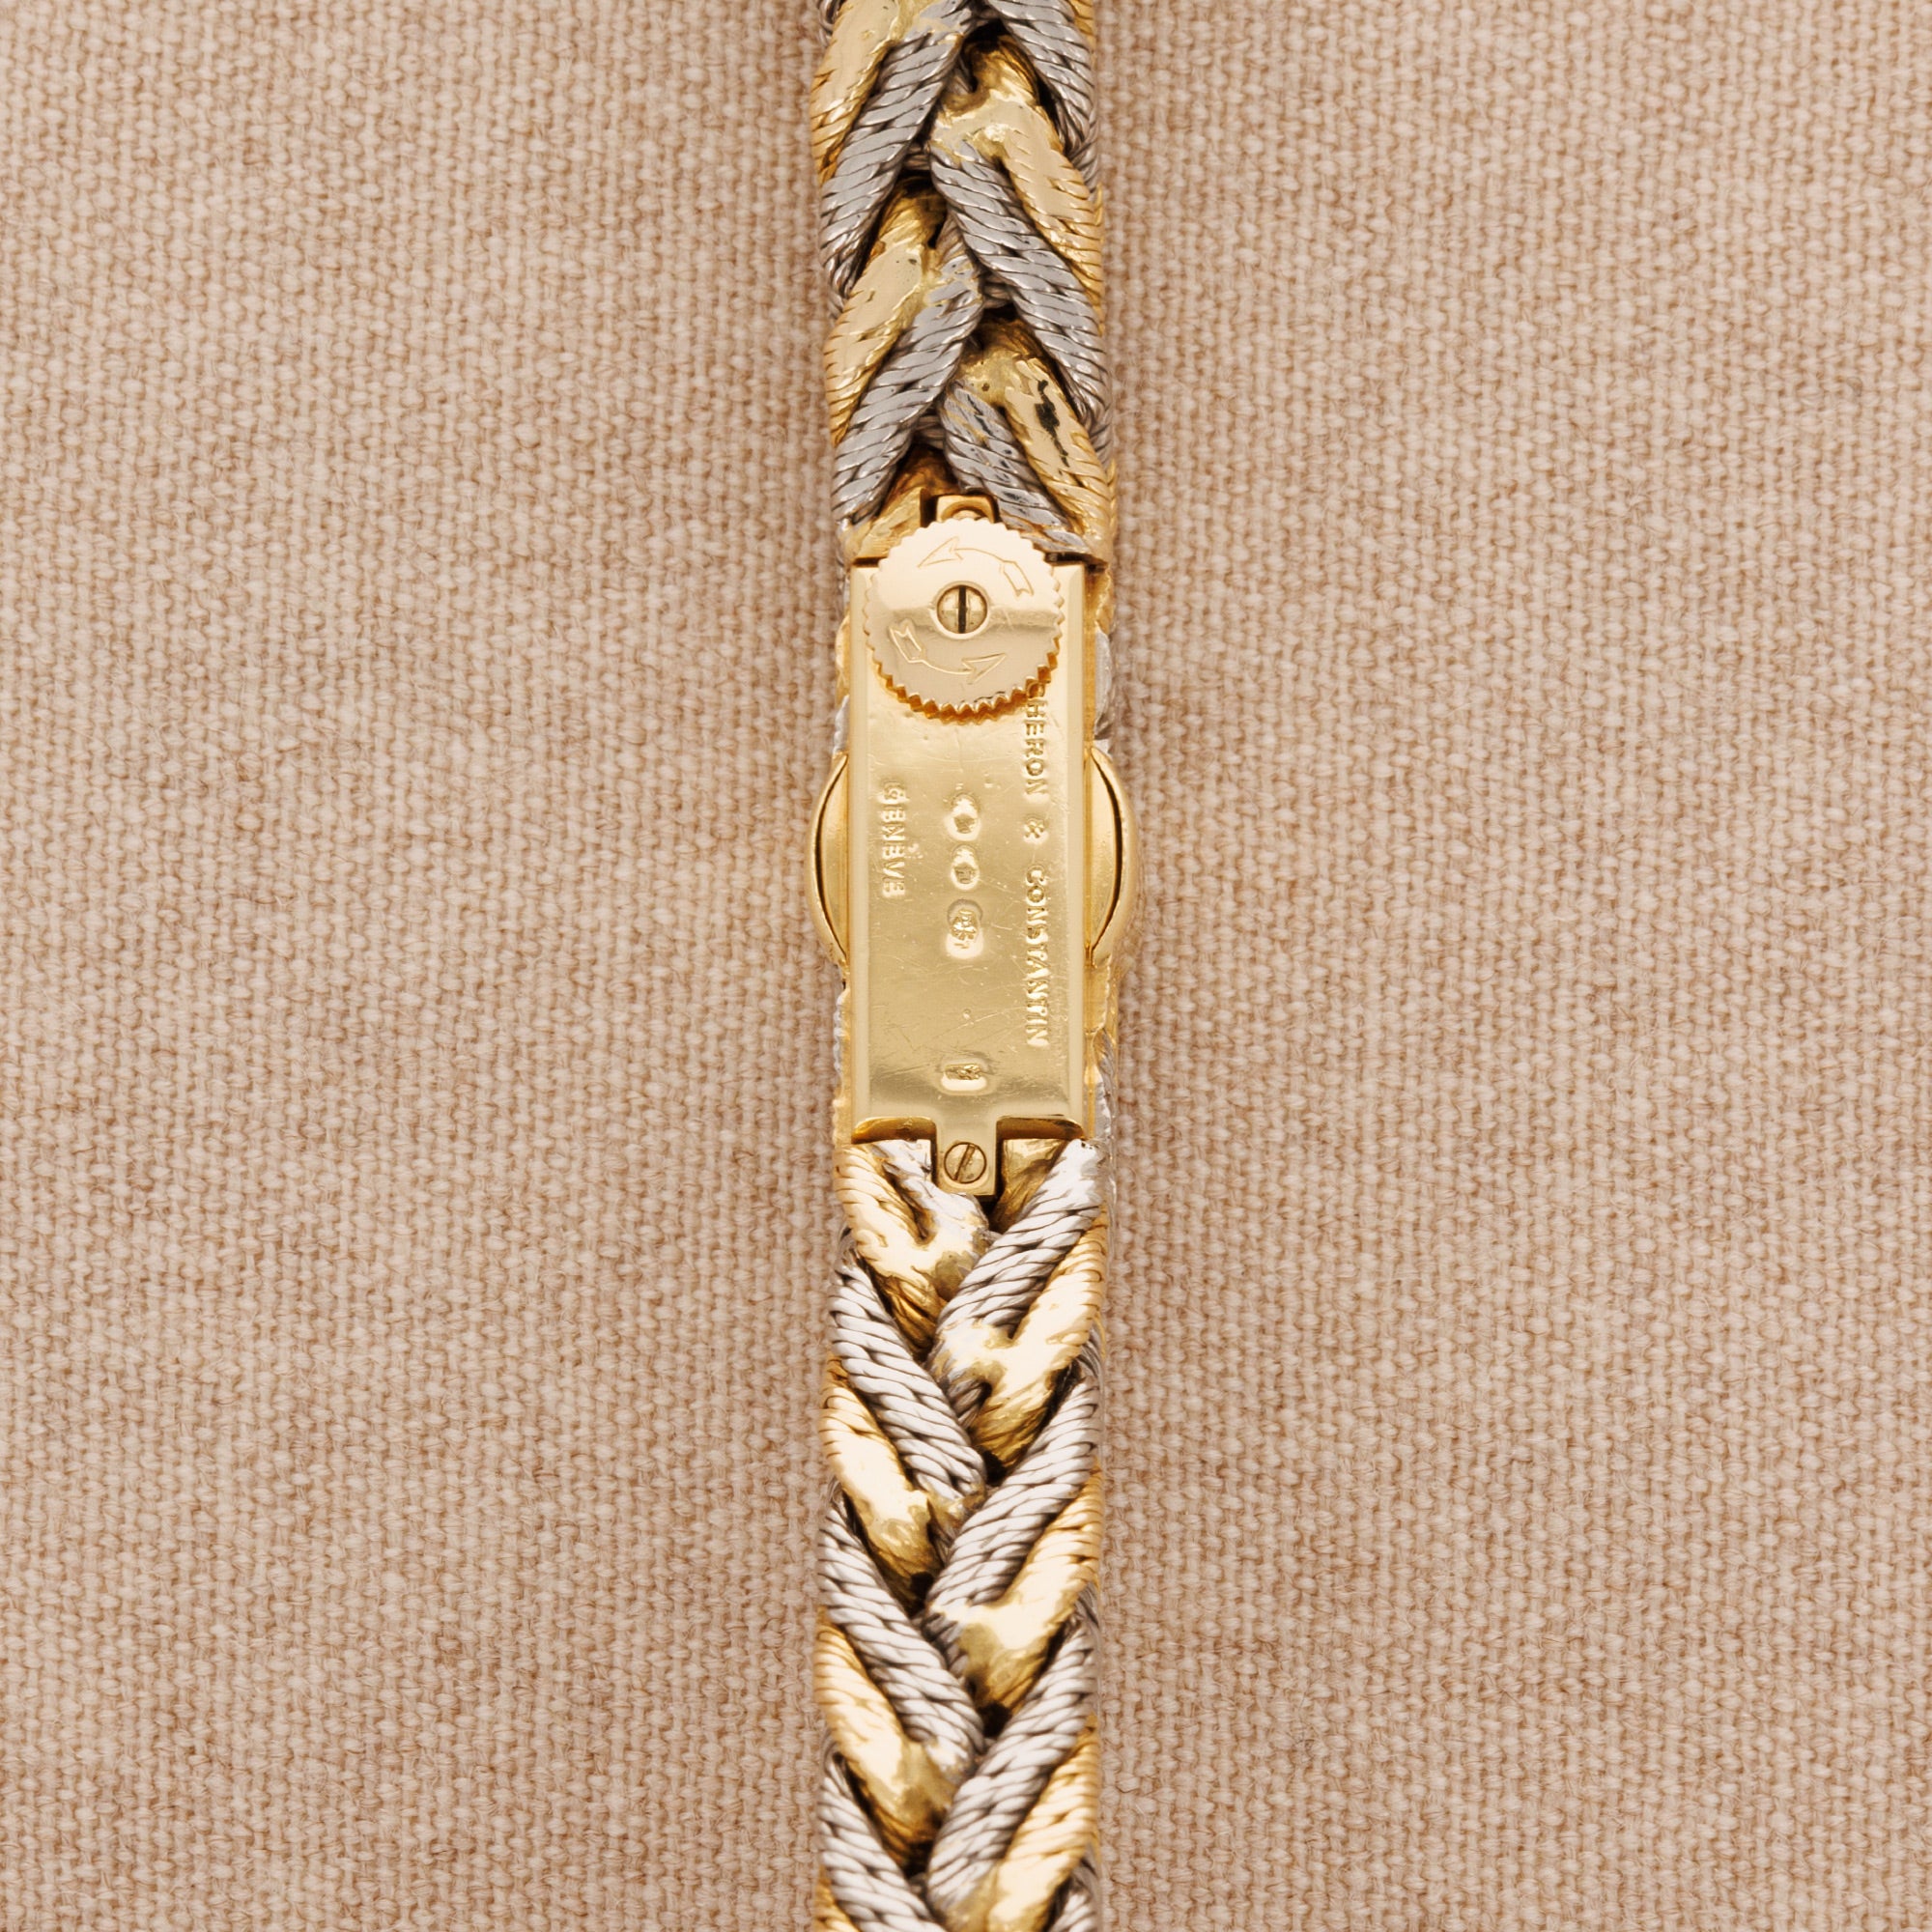 Vacheron Constantin Platinum &amp; Gold Diamond Watch by George Lenfant